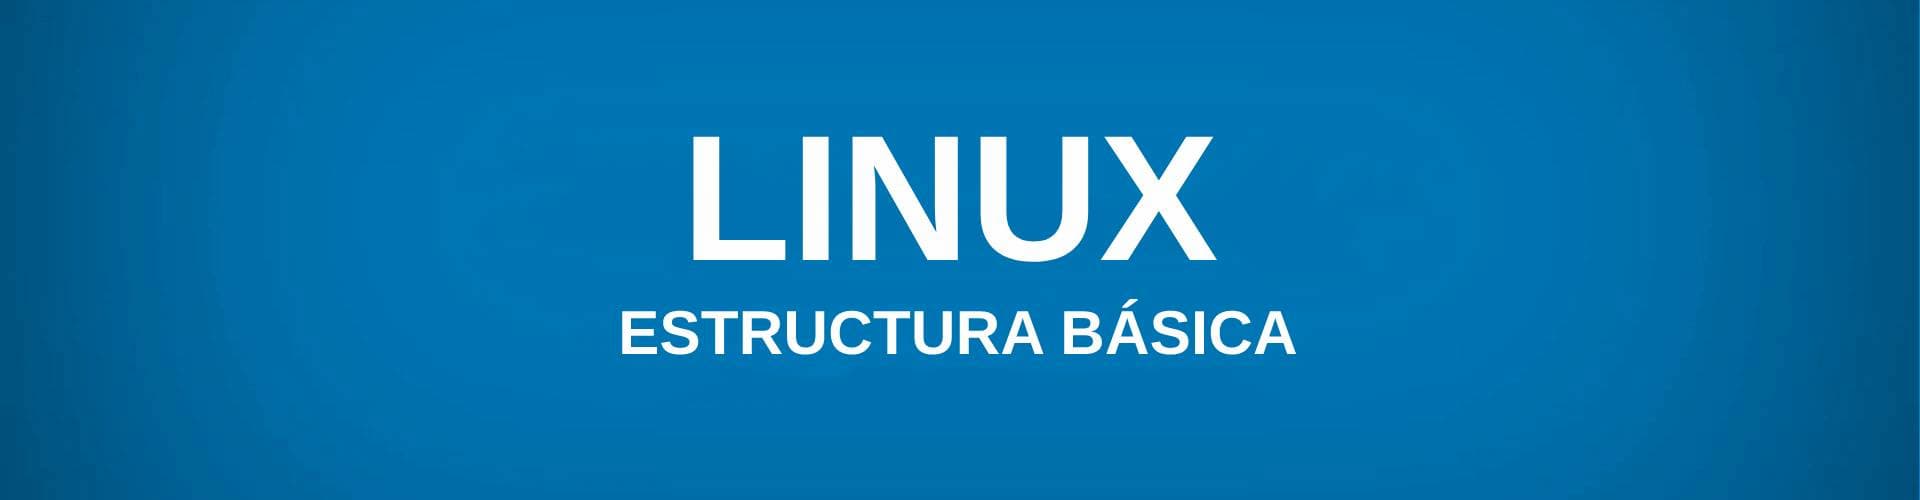 estructura-basica-linux